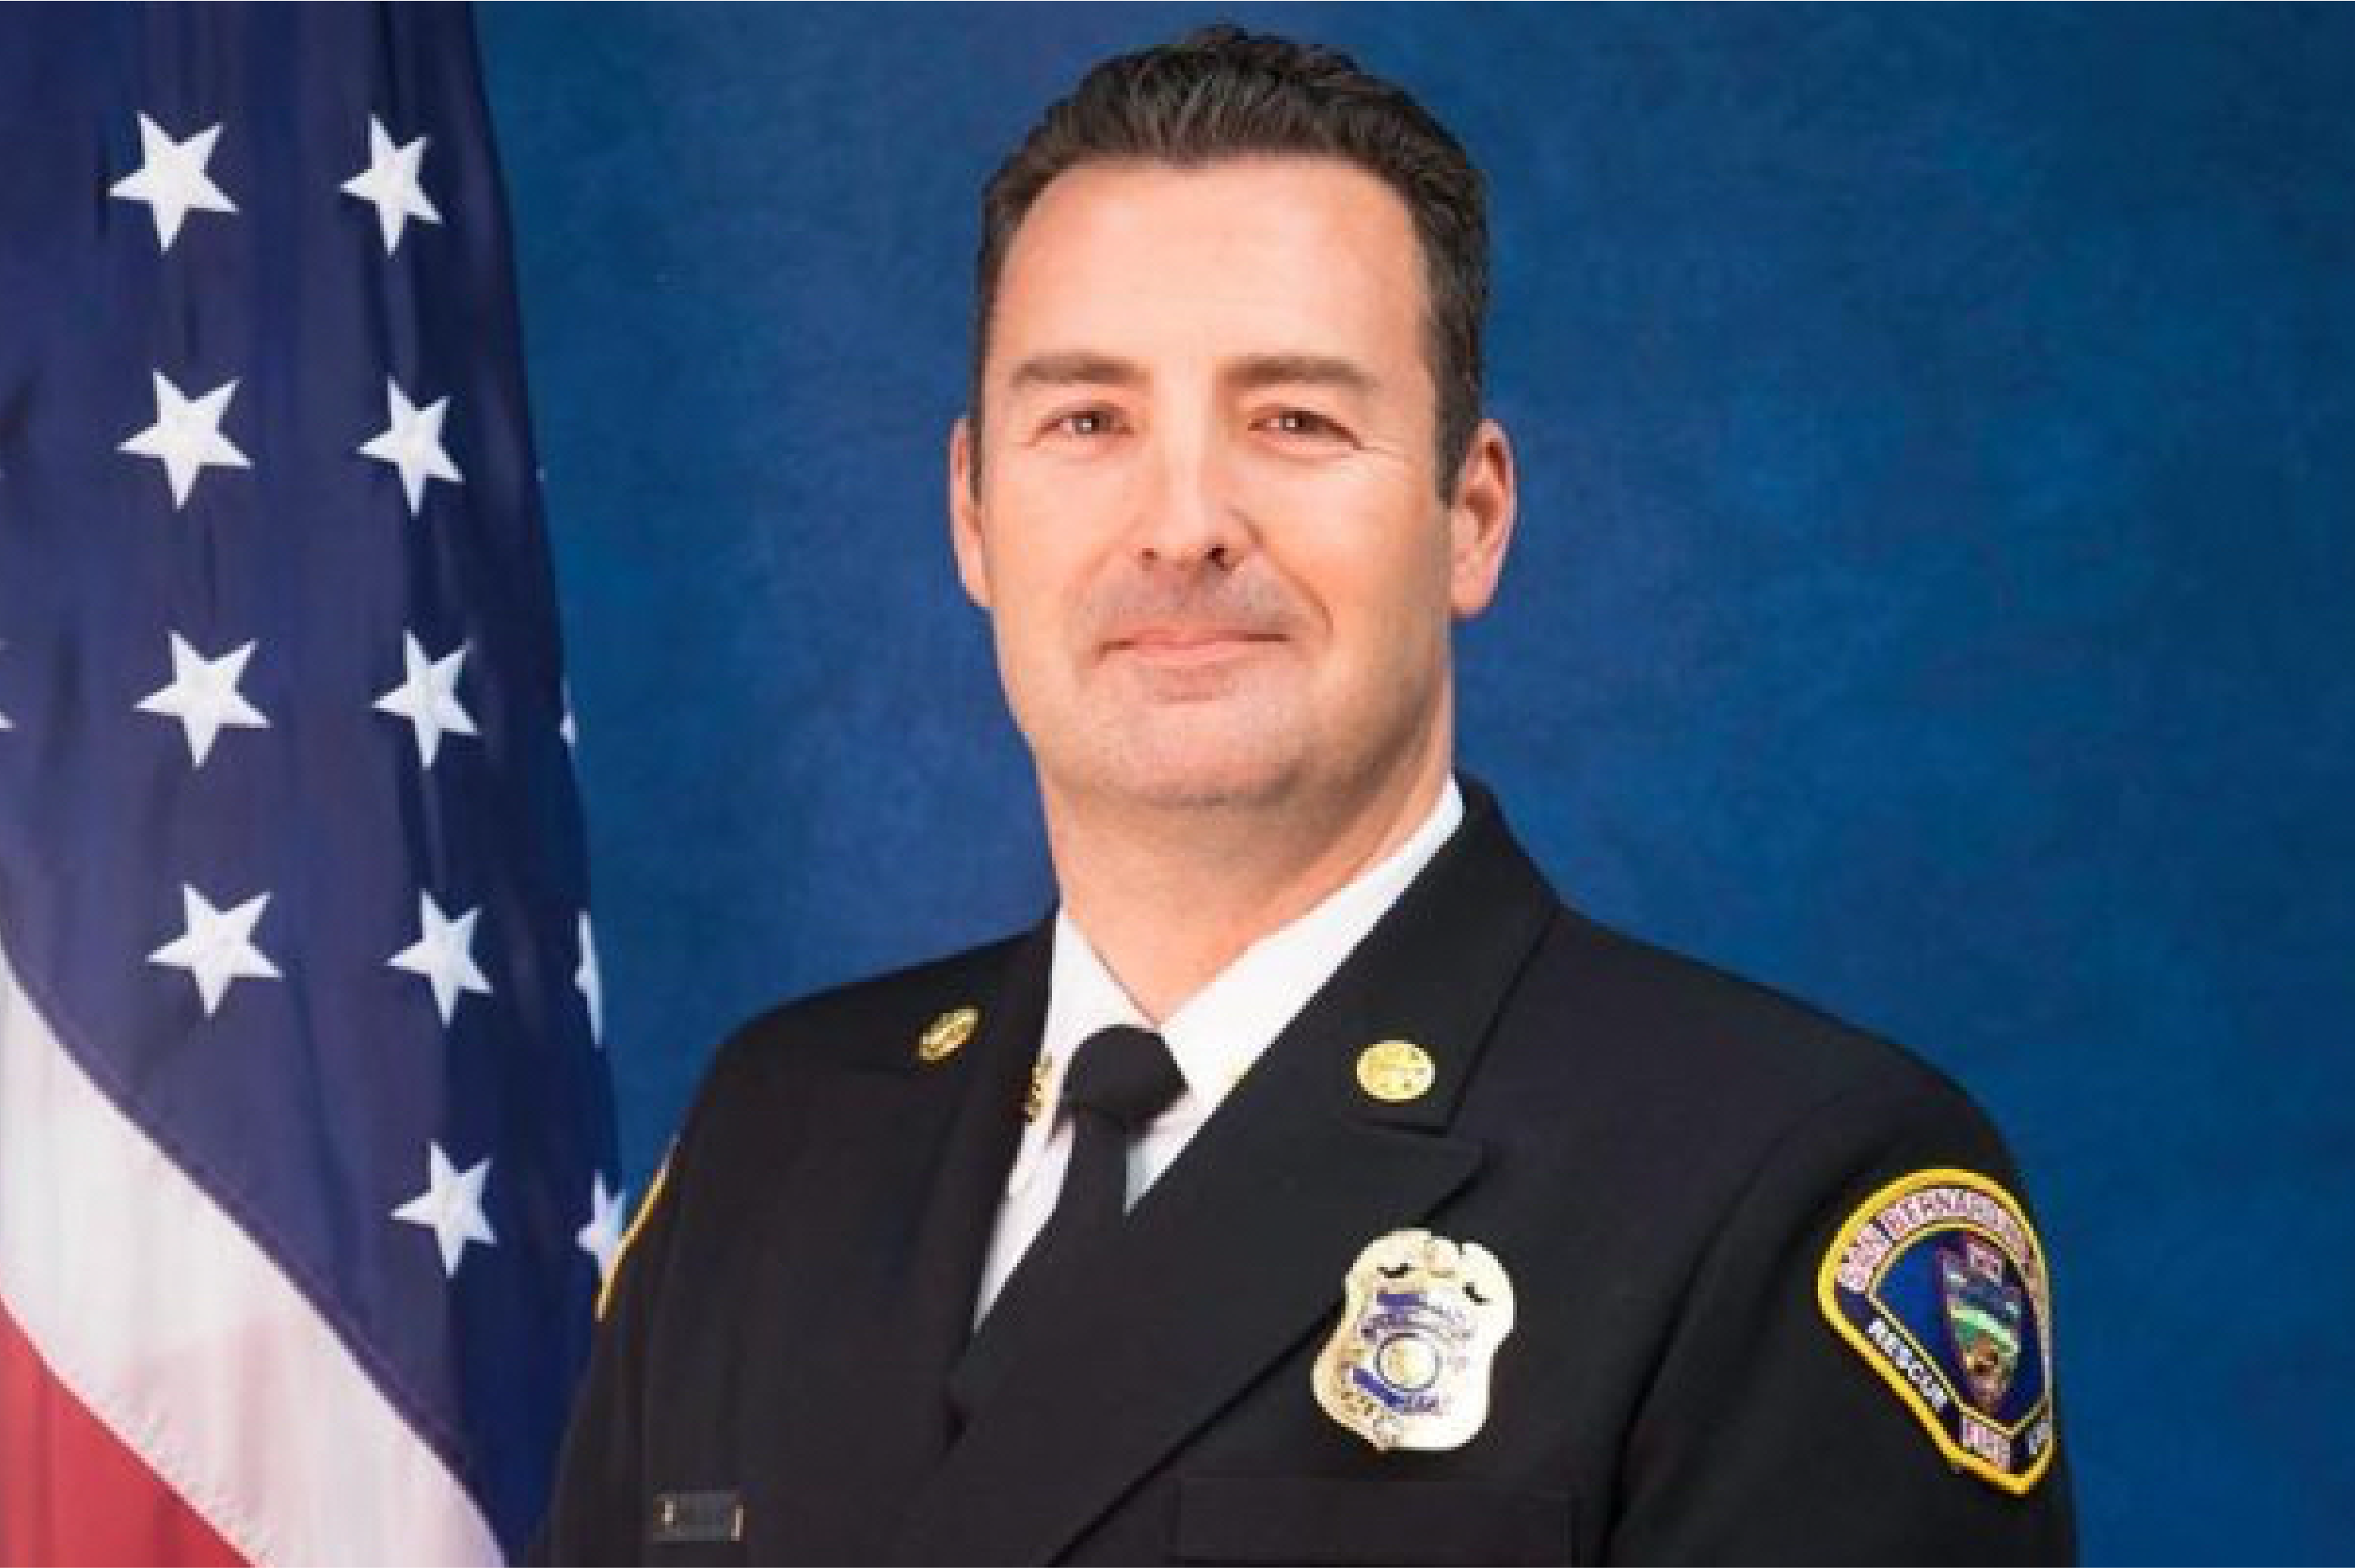 Preparedness profile: Q&A with Fire Chief Dan Munsey